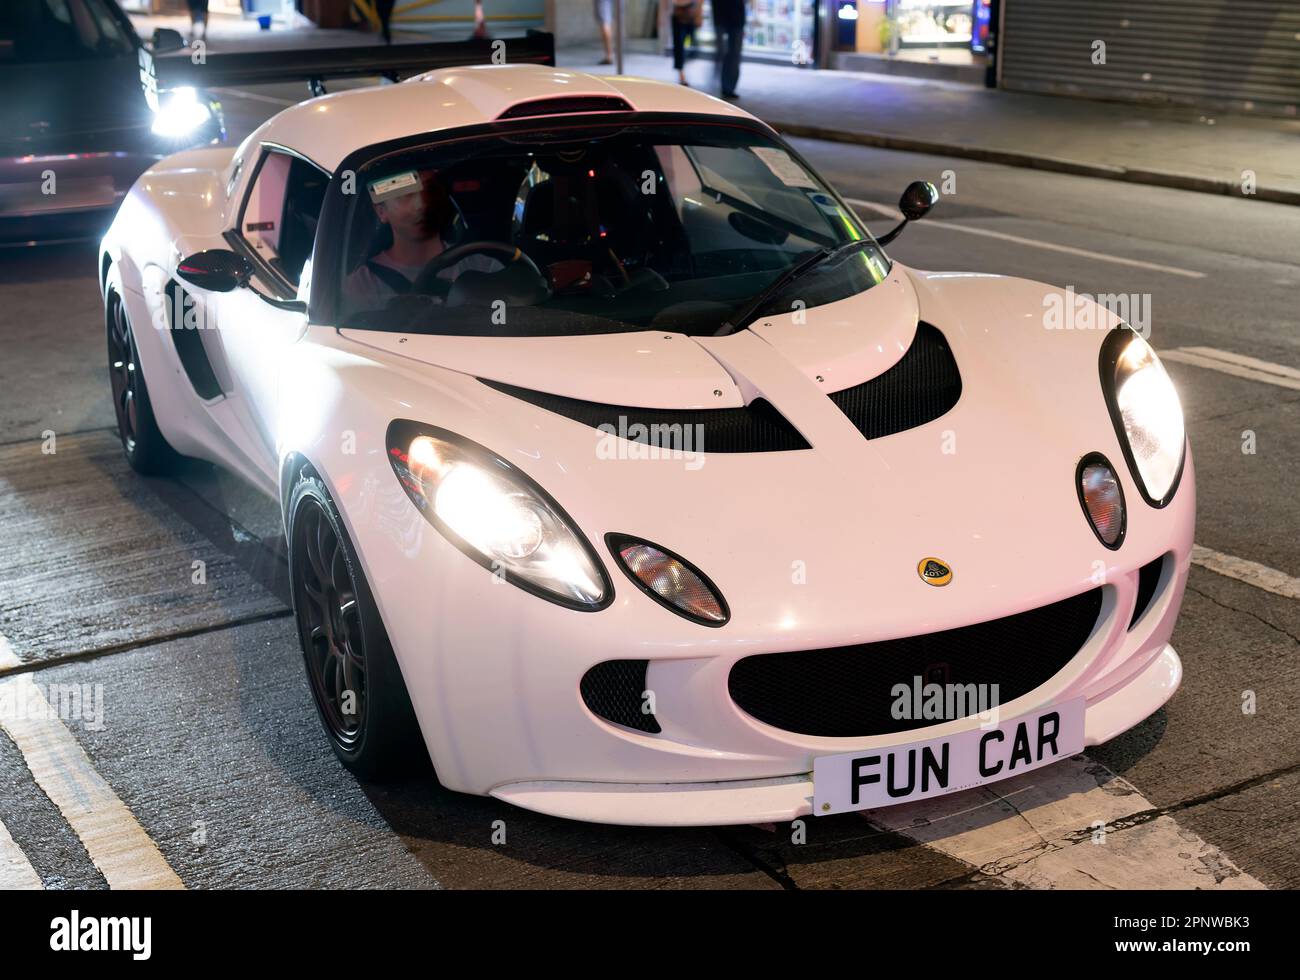 Lotus personalizzato con targa 'Fun Car' Hong Kong, Cina. Foto Stock